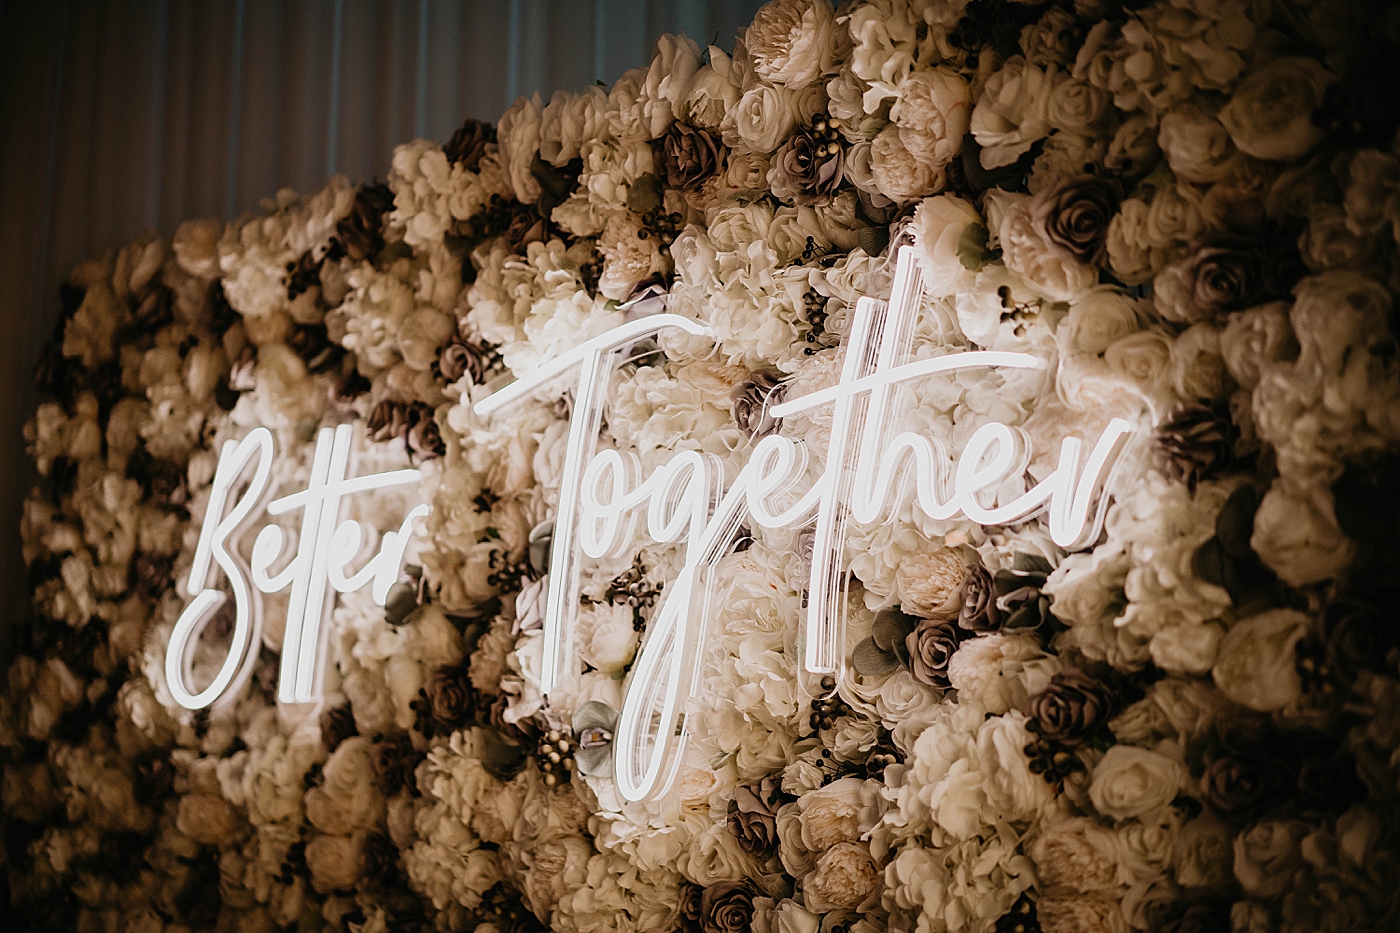 Flower "Better Together" sign Lavan Venue Wedding Photography captured by South Florida Wedding Photographer Krystal Capone Photography